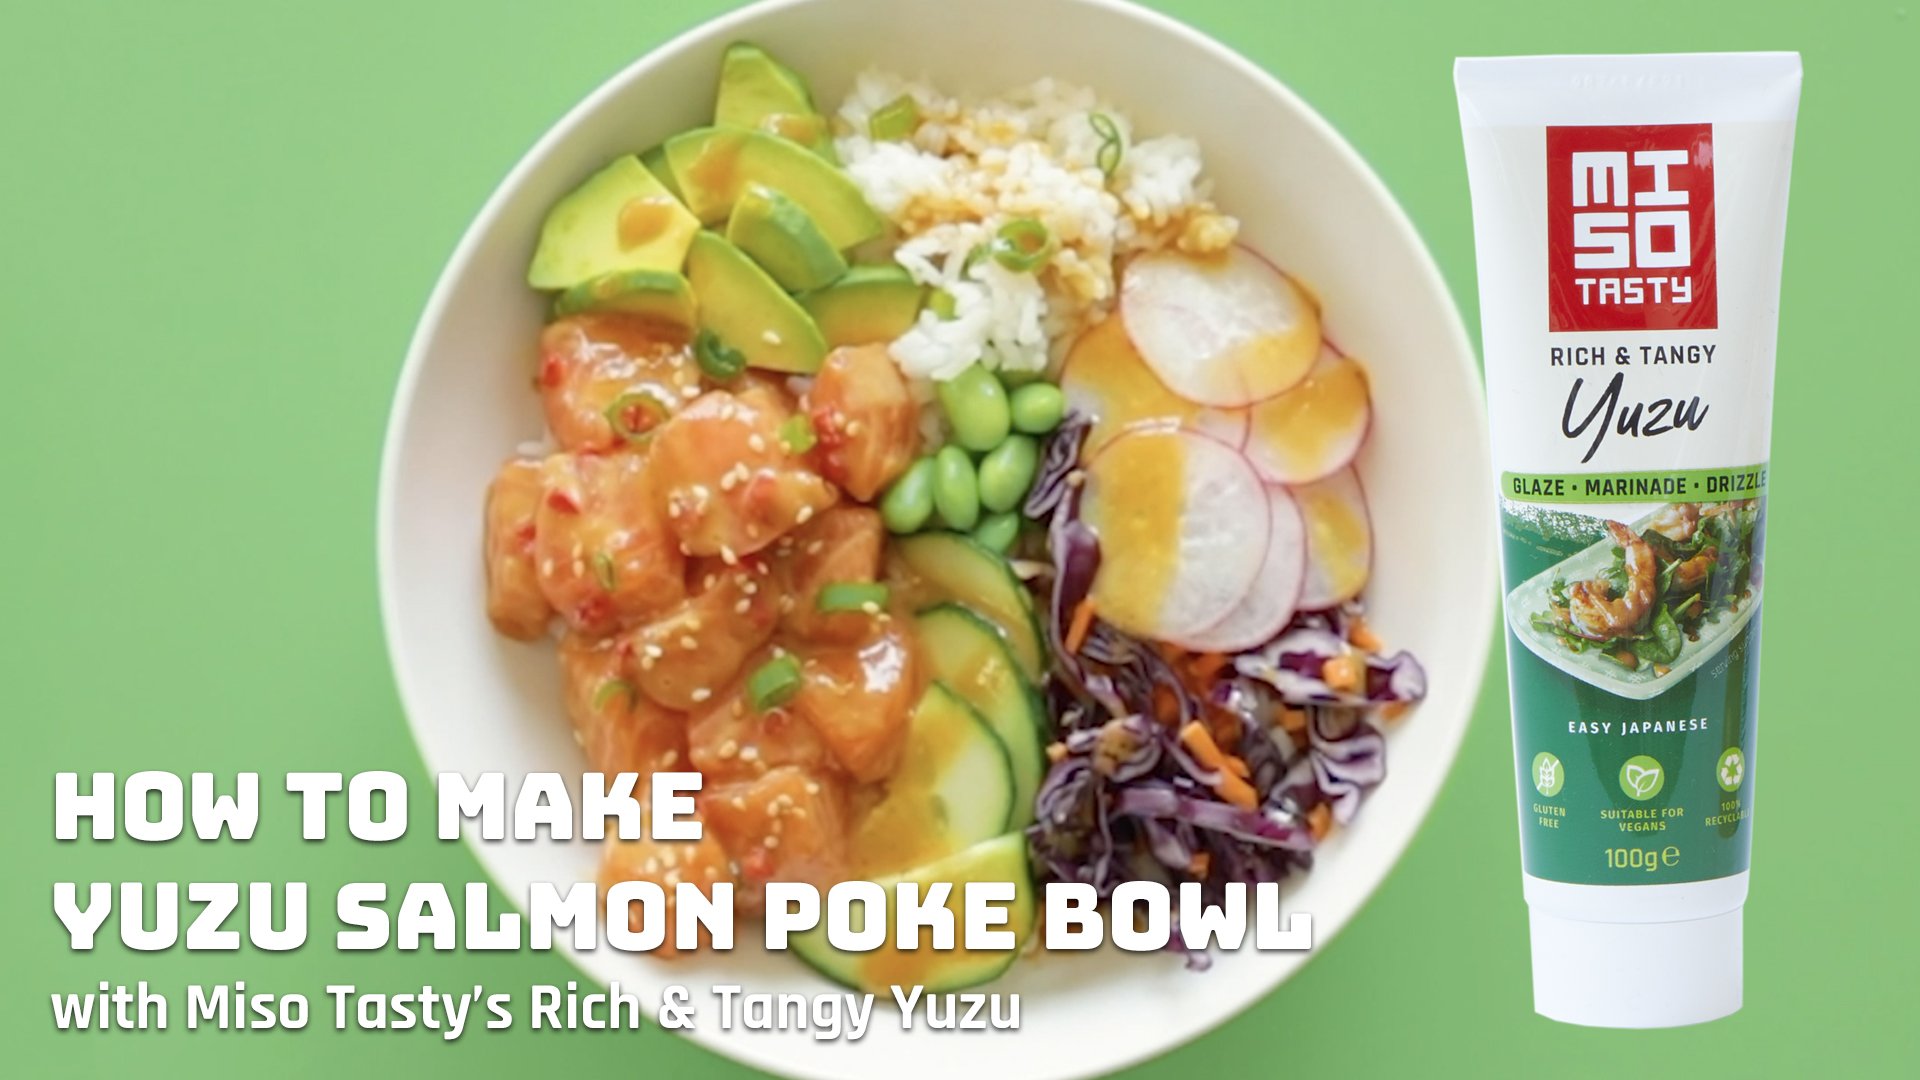 Miso Tasty’s Quick Yuzu Salmon Poke Bowl